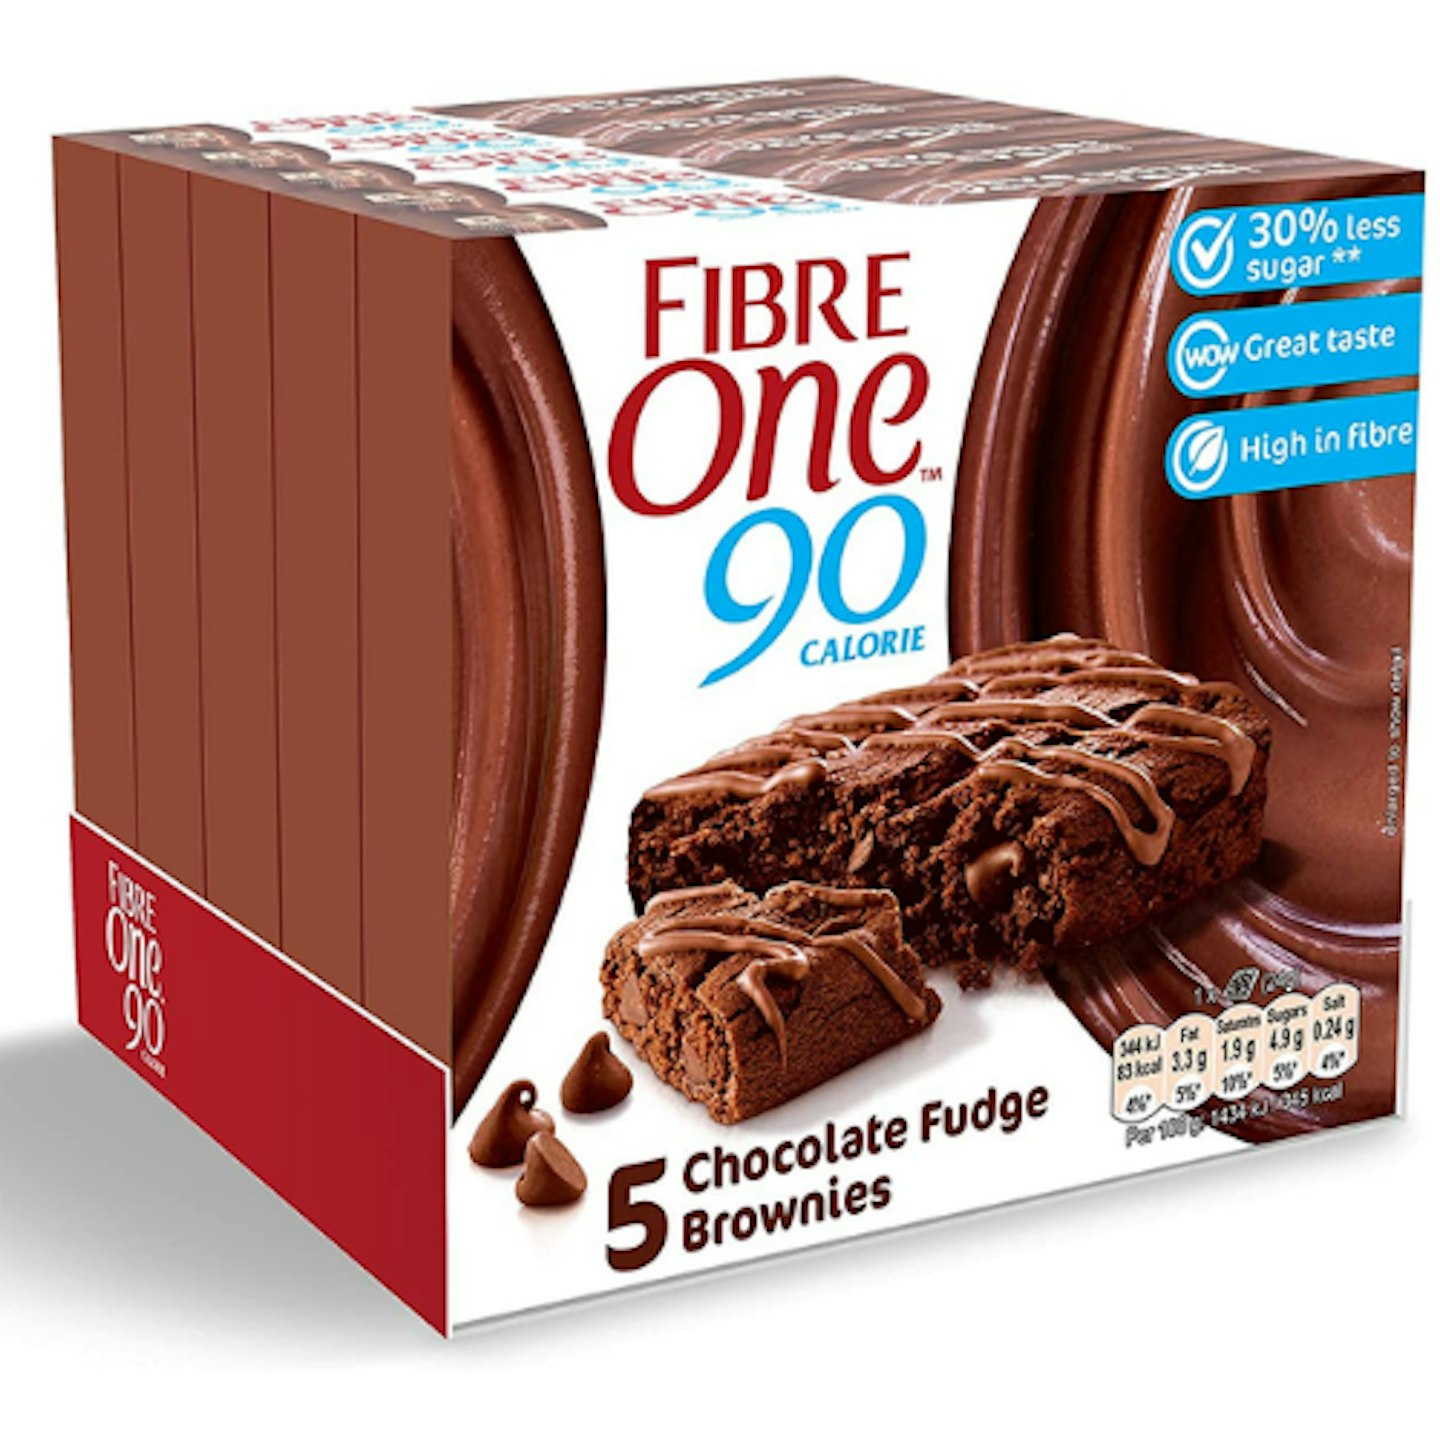 Fibre One 90 Calorie Chocolate Fudge High Fibre Brownies